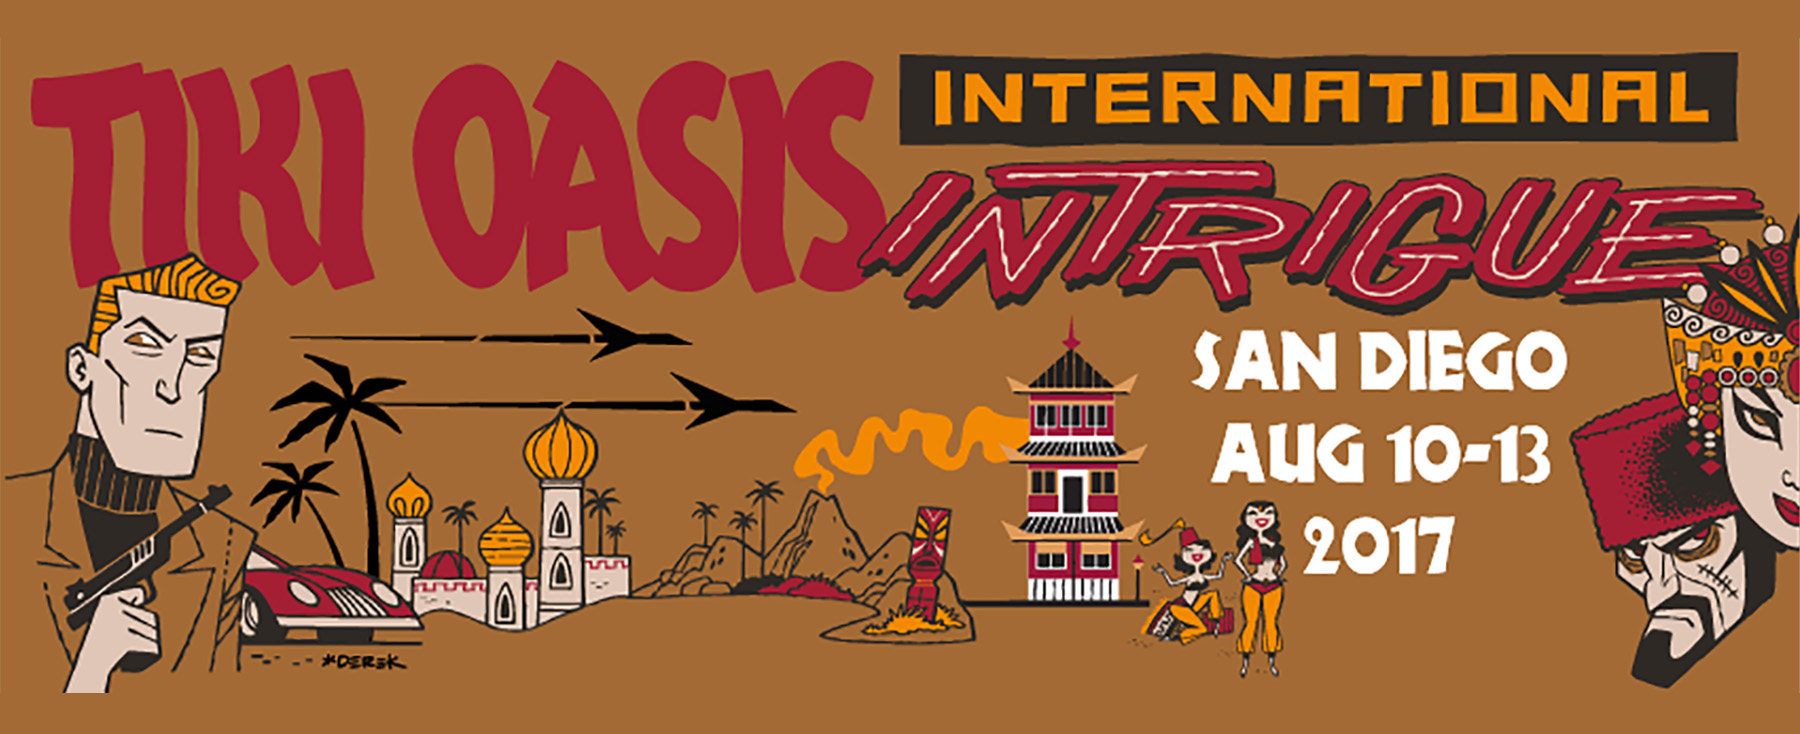 Tiki Oasis 2017: International Intrigue